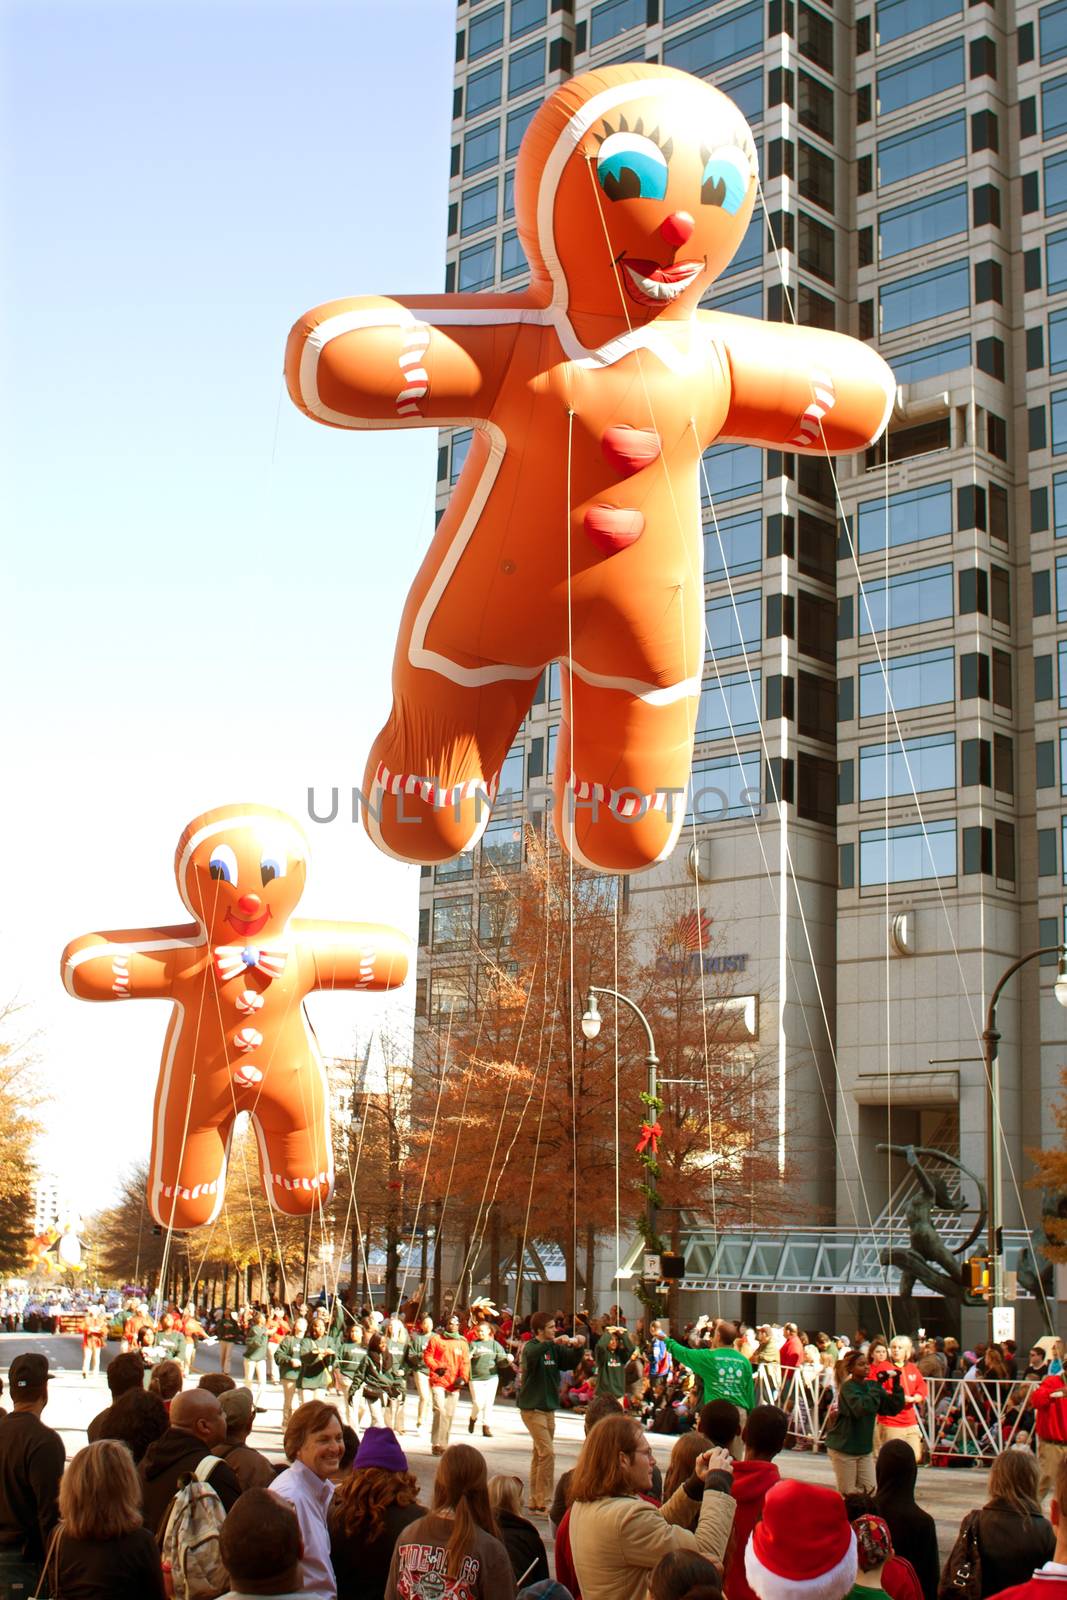 Gingerbread Man Balloons Float Through Atlanta Christmas Parade by BluIz60